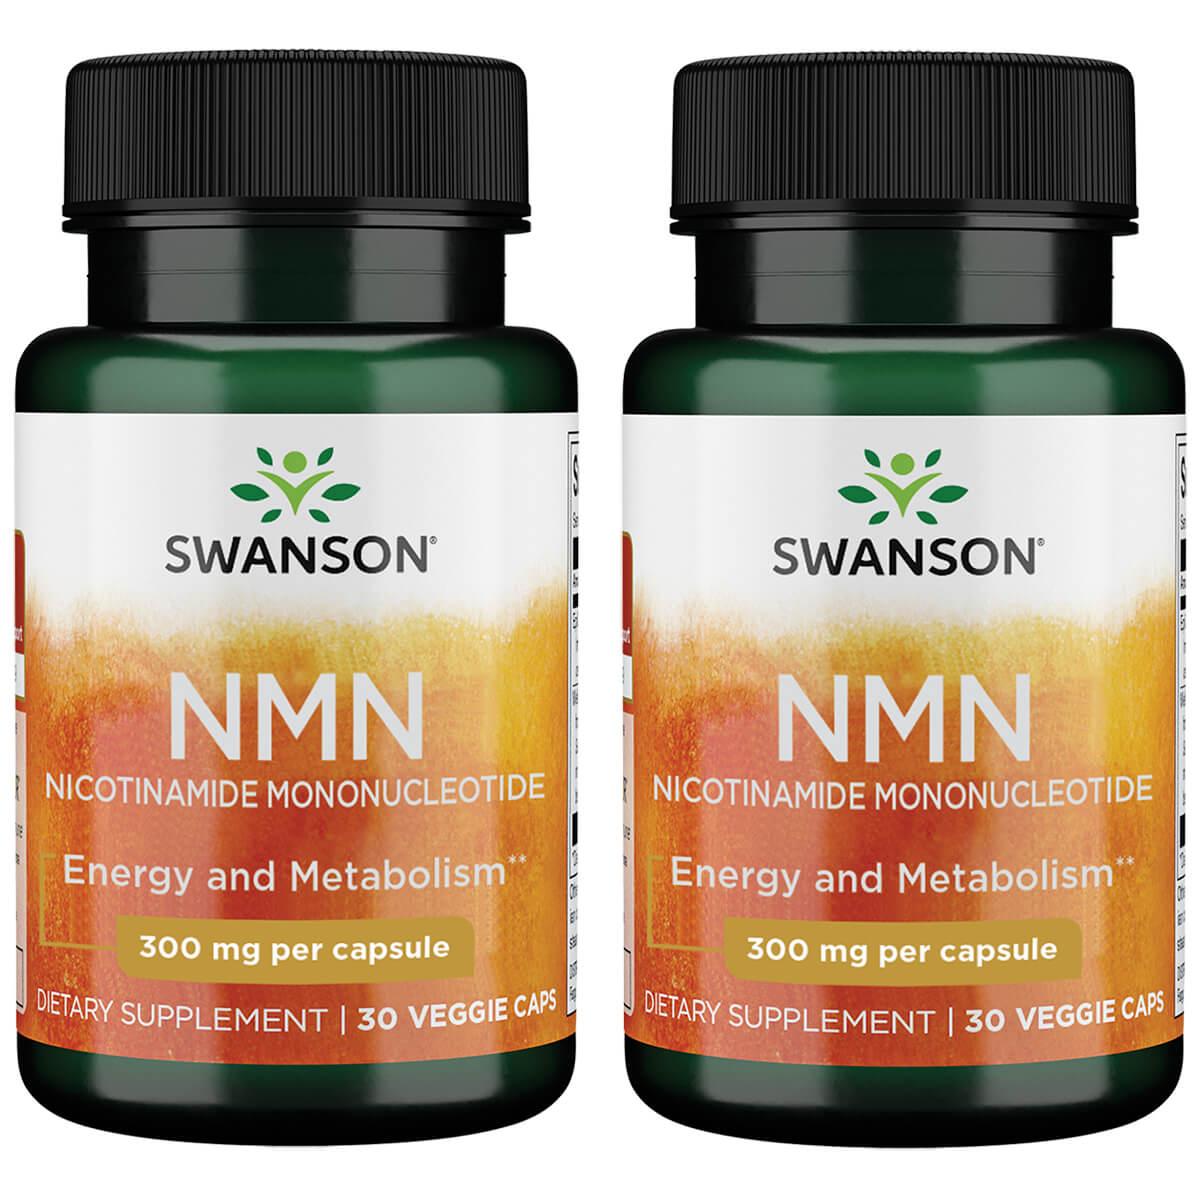 Swanson Premium Nmn Nicotinamide Mononucleotide 2 Pack Vitamin 300 mg 30 Veg Caps